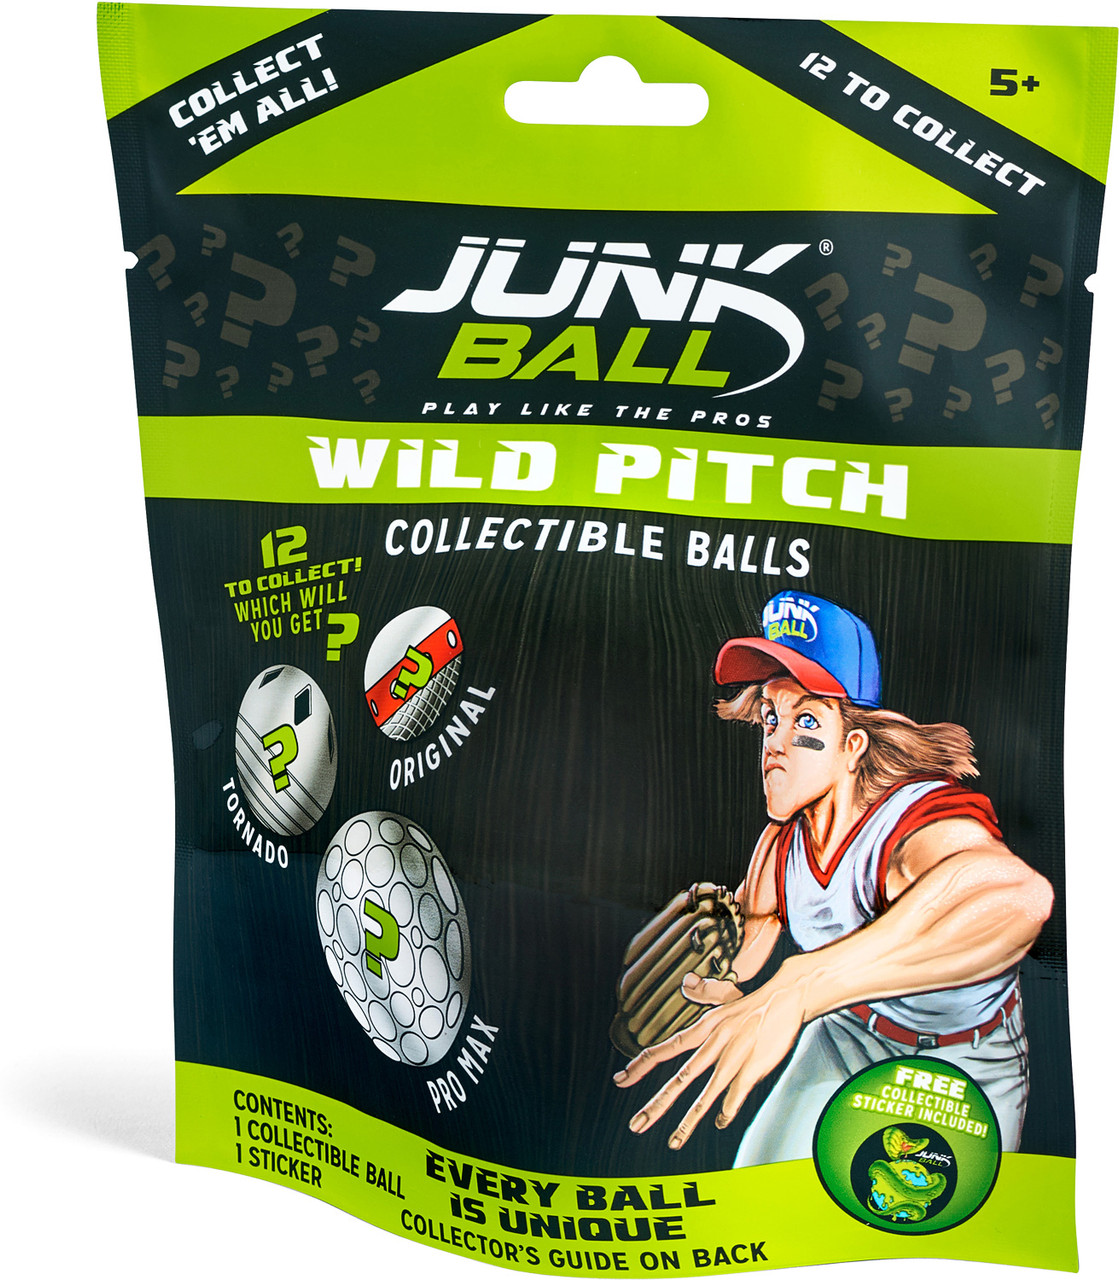 Junk Ball Wild Pitch Collectible Balls 2